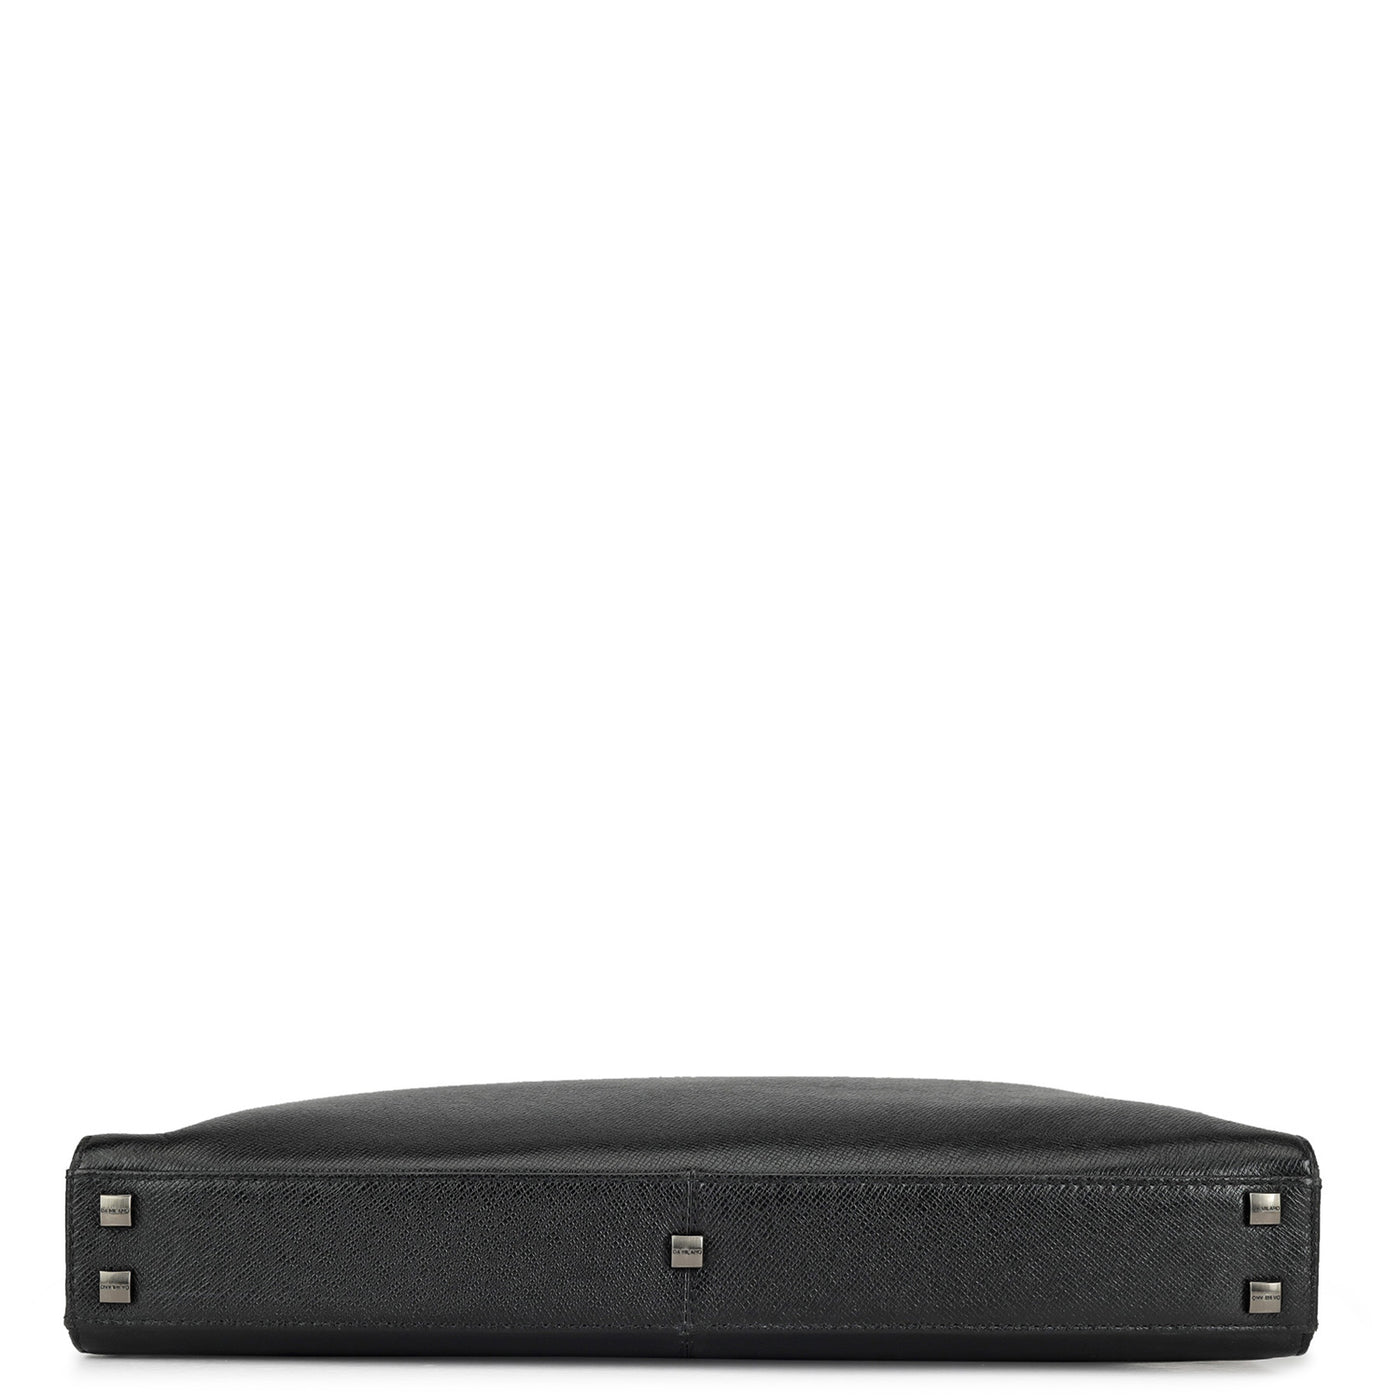 Black Franzy Leather Laptop Sleeve - Upto 15"